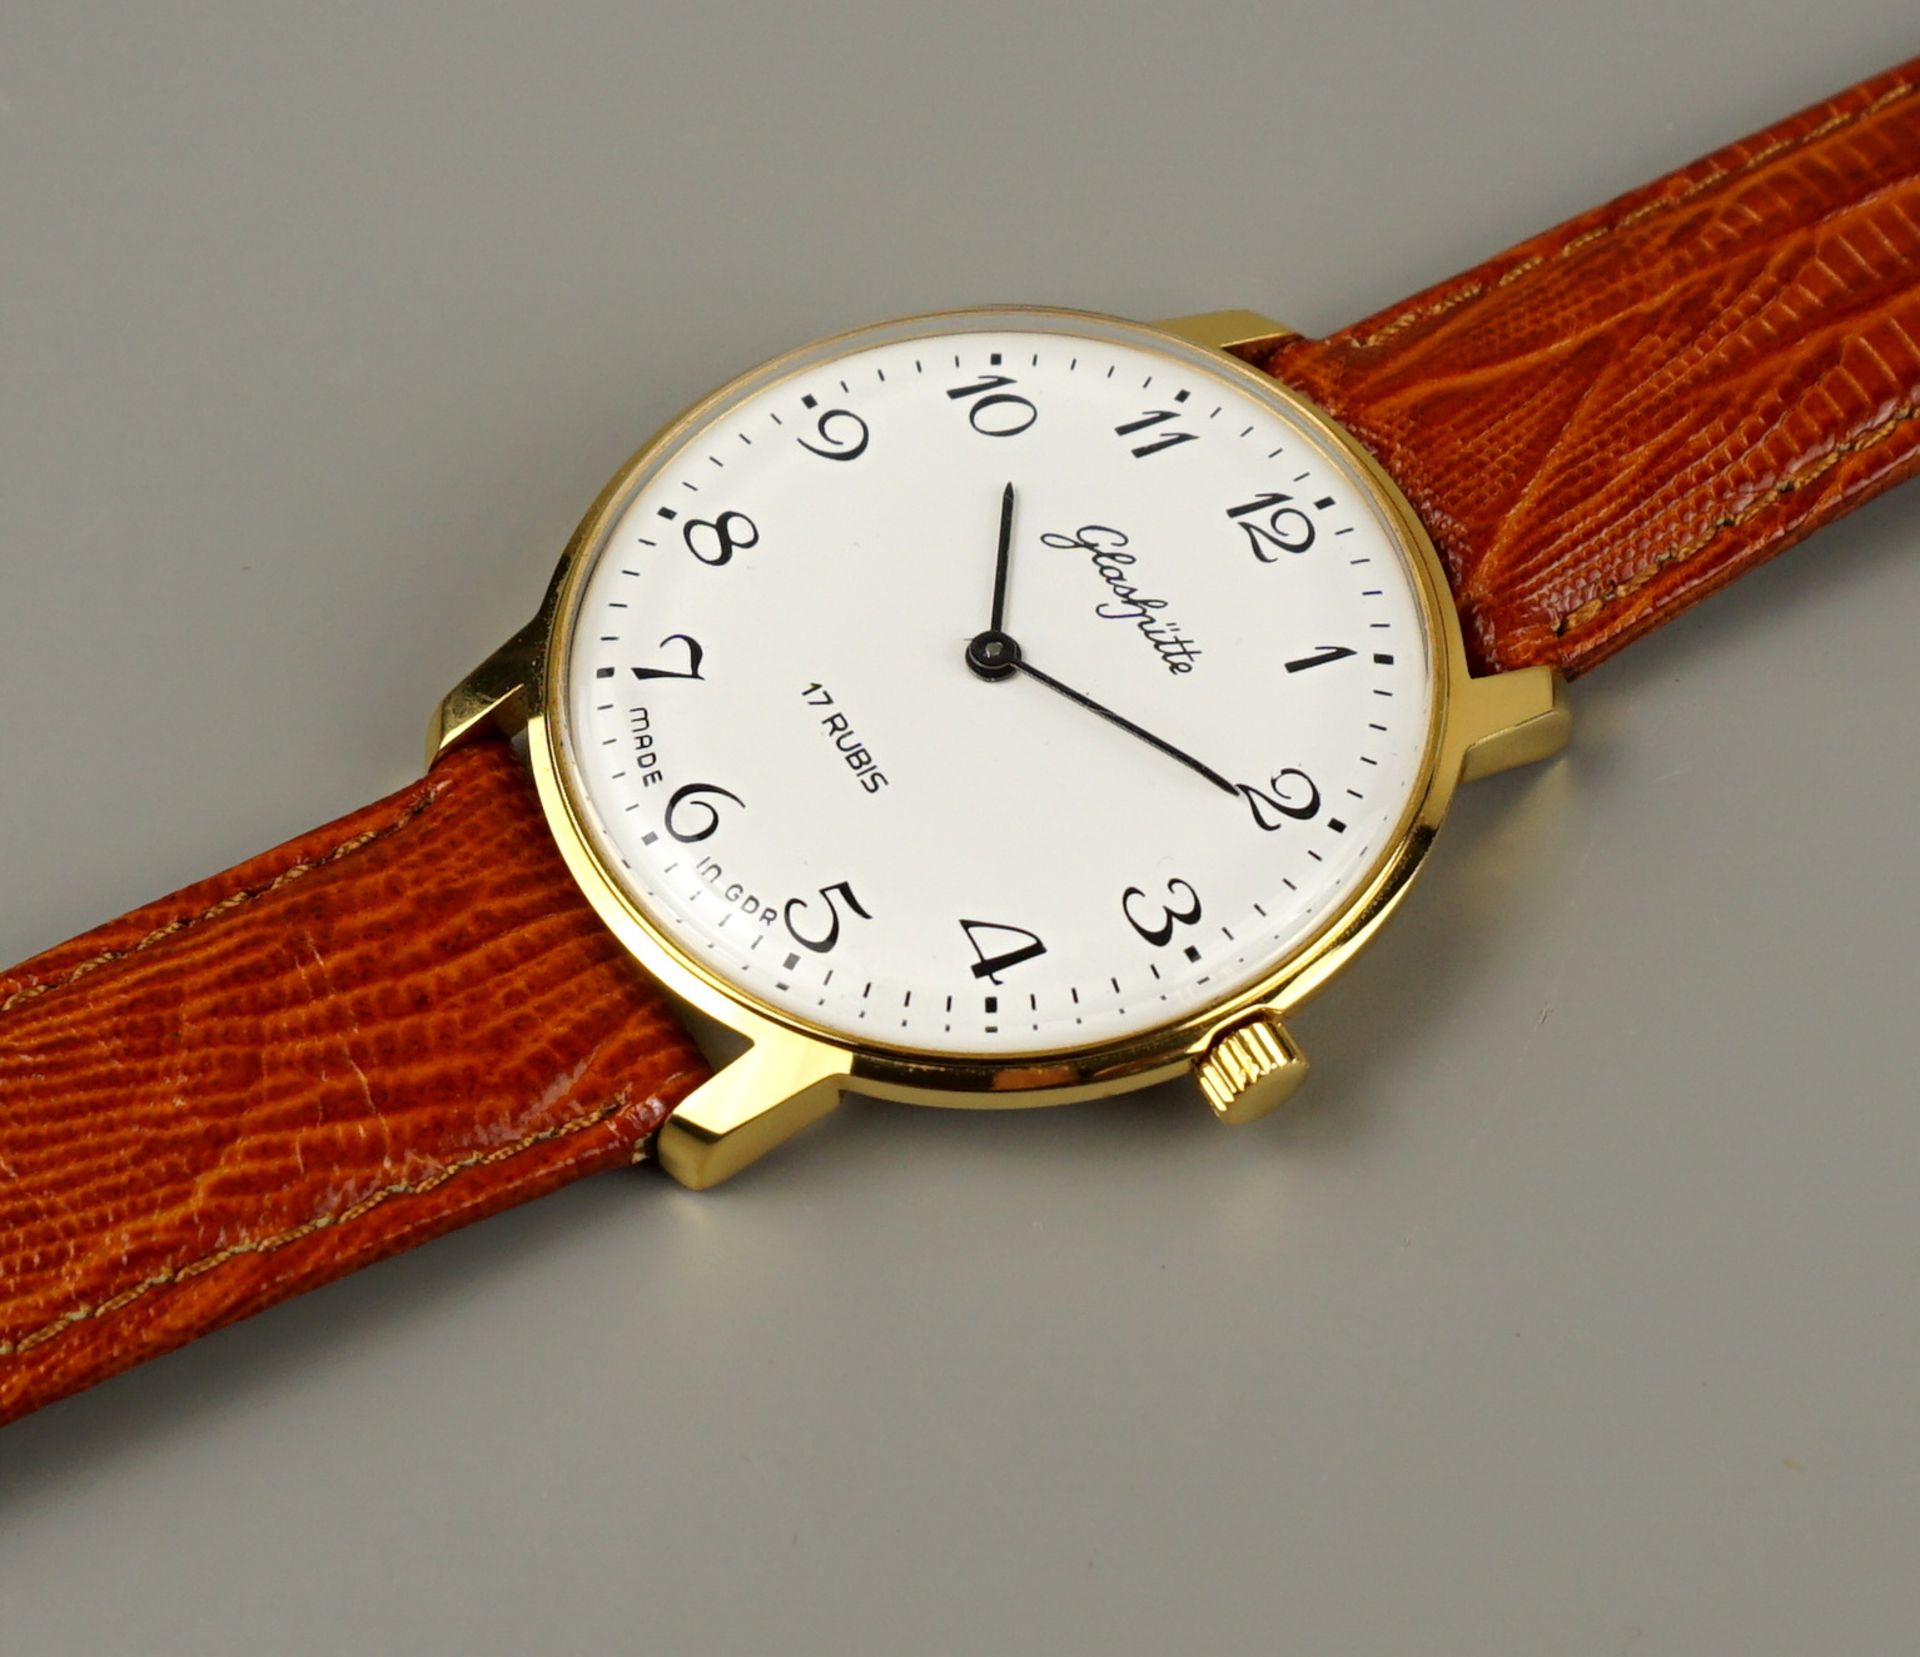 Wrist watch Glashütte, cal. 09-20